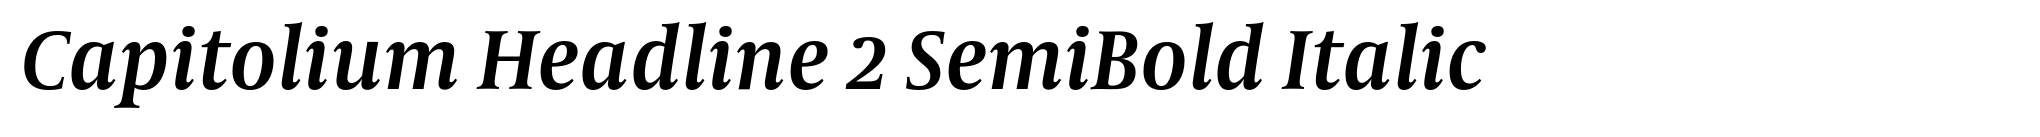 Capitolium Headline 2 SemiBold Italic image